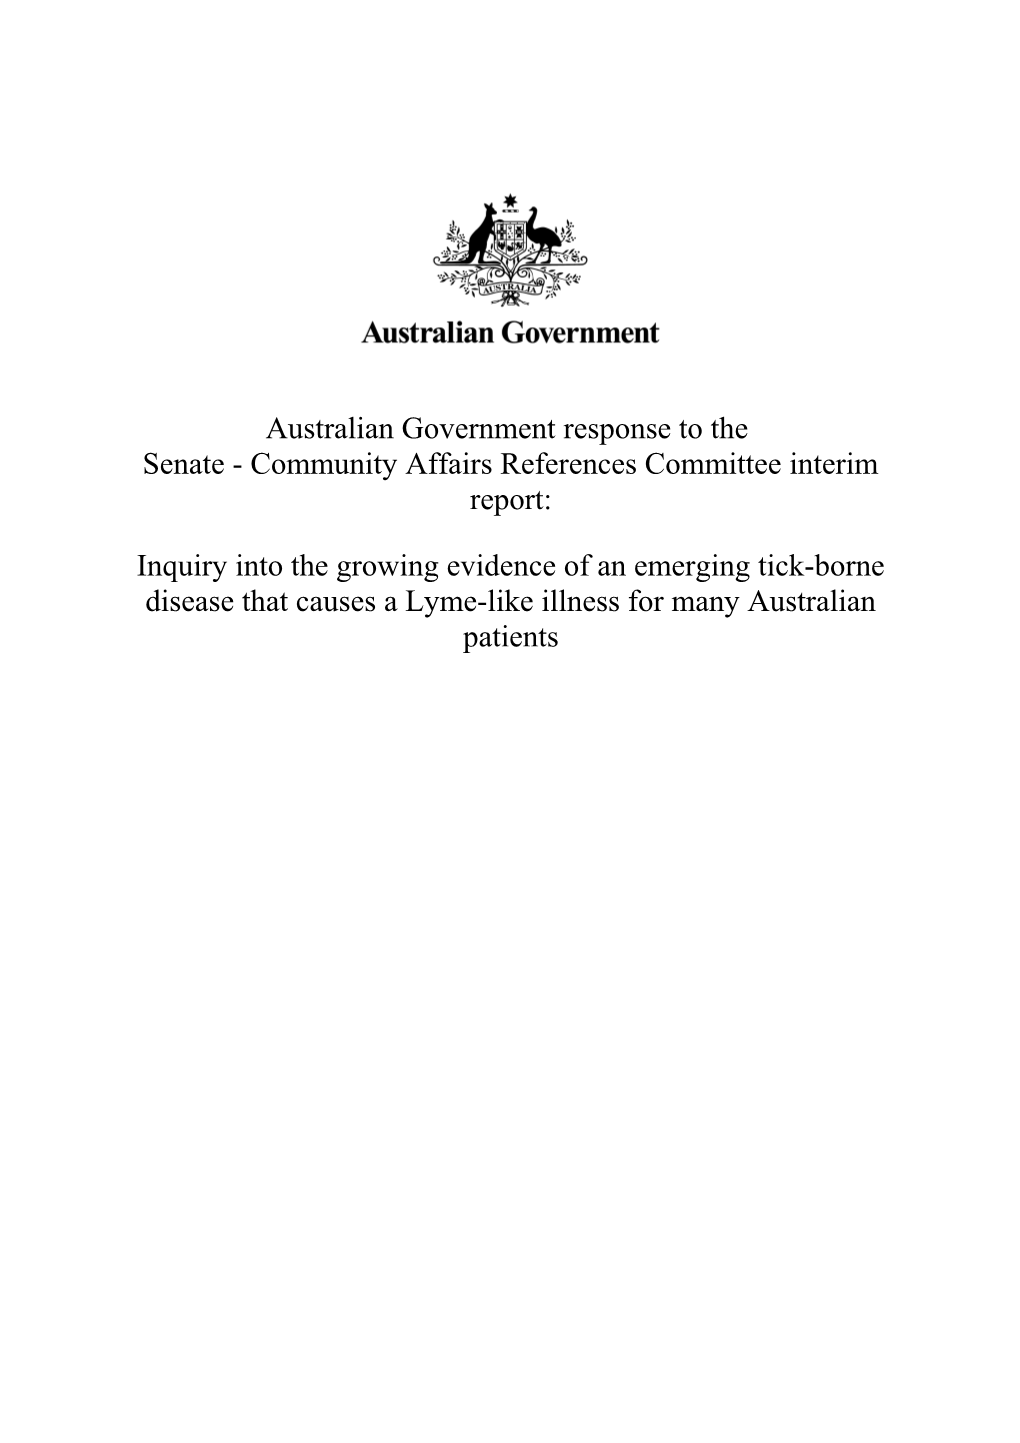 Australian Government Response to the Senate - Community Affairs References Committee Interim